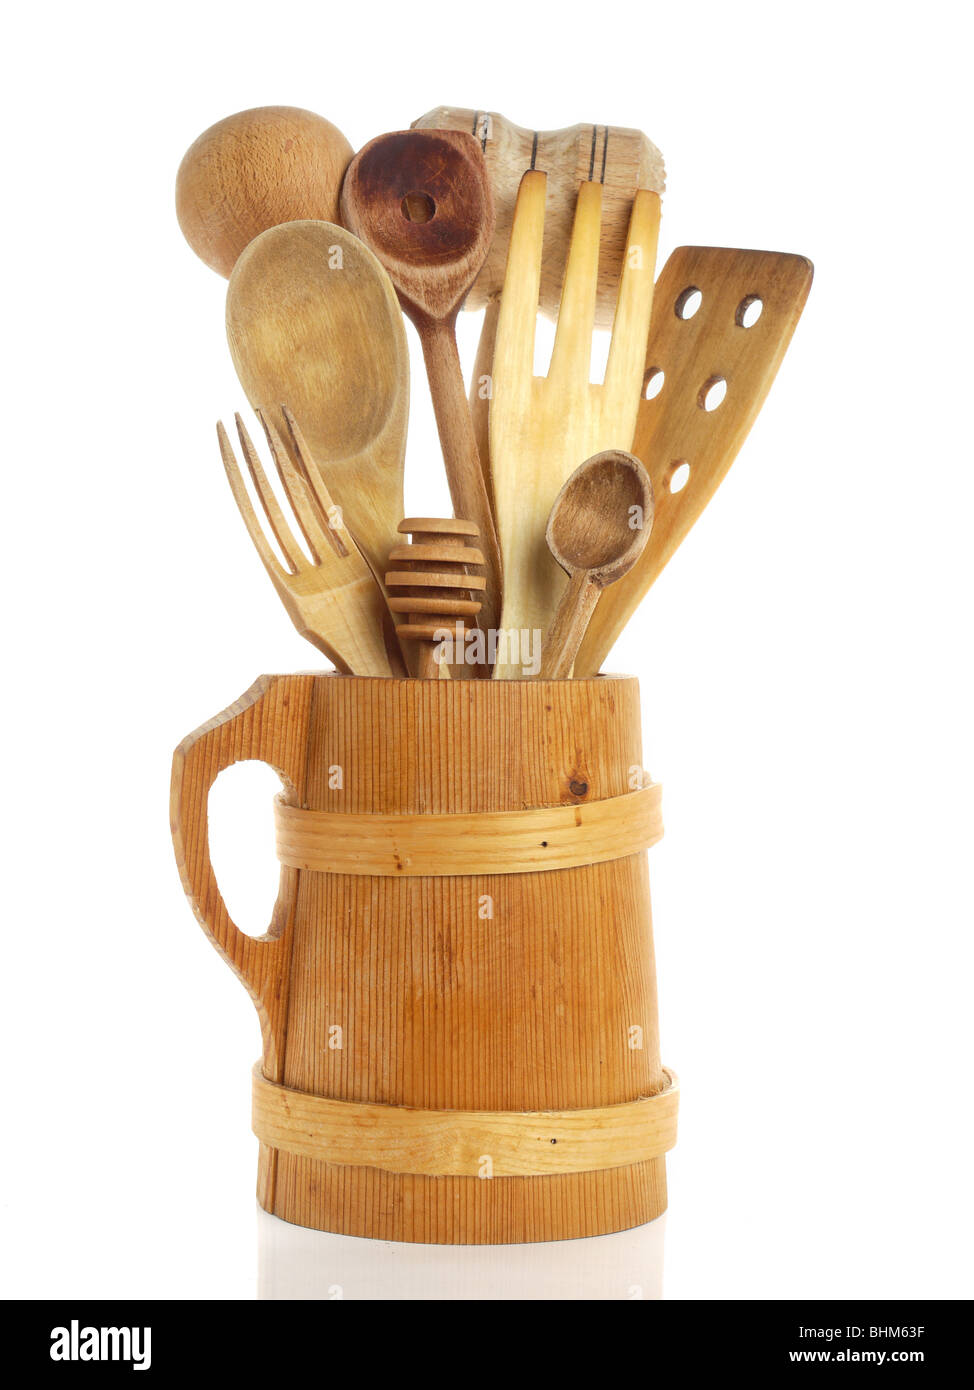 Wooden kitchen utensils over white background Stock Photo